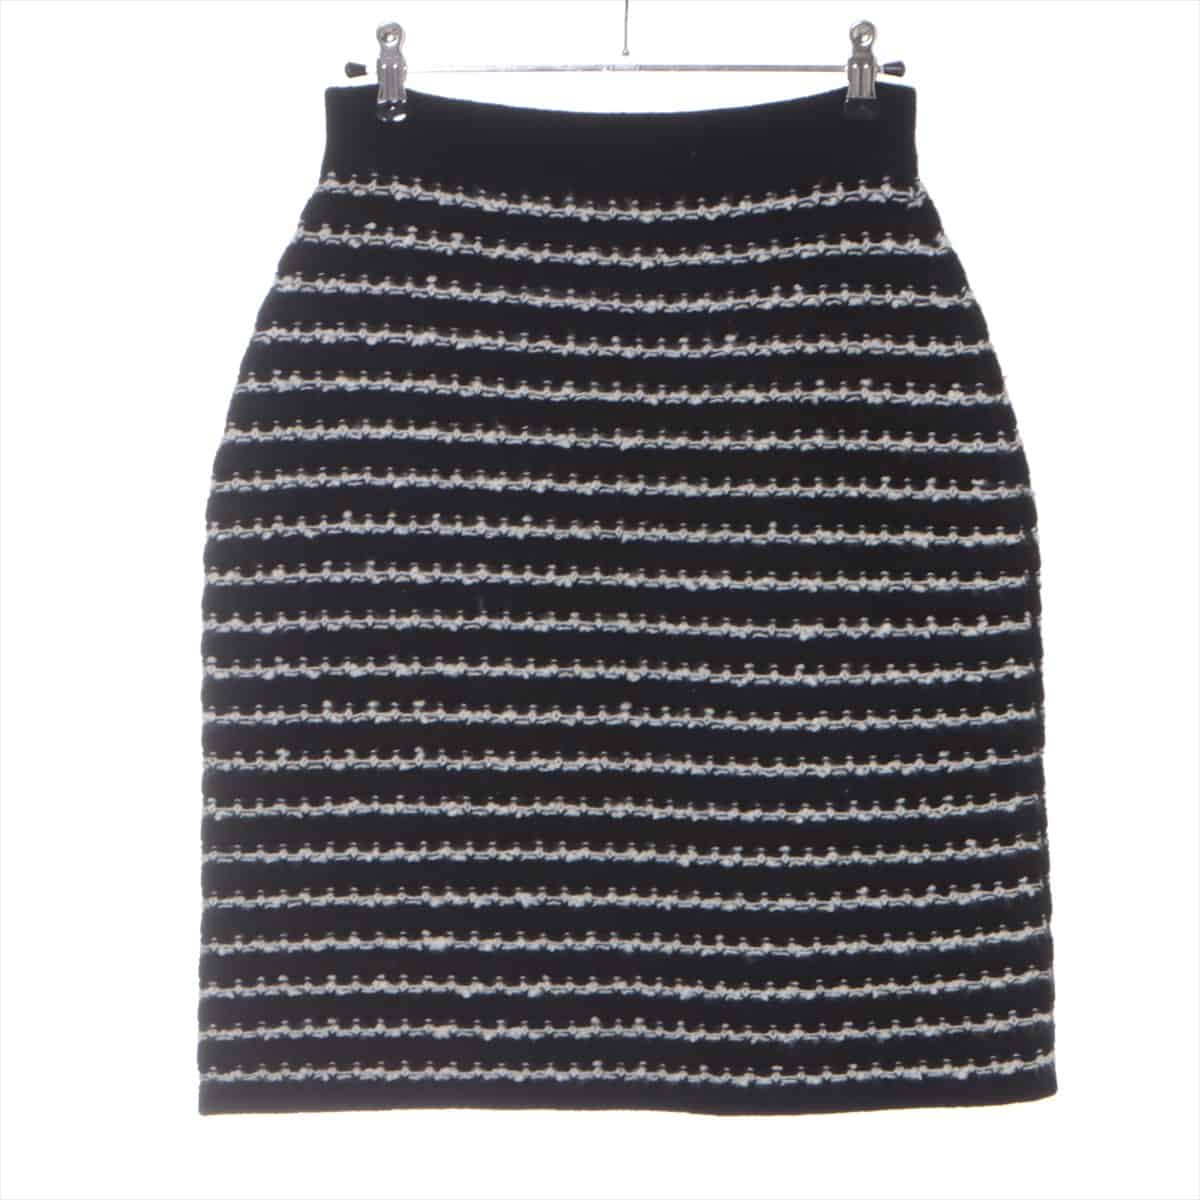 Chanel P39 Wool Knit Skirt 40 Ladies' Black